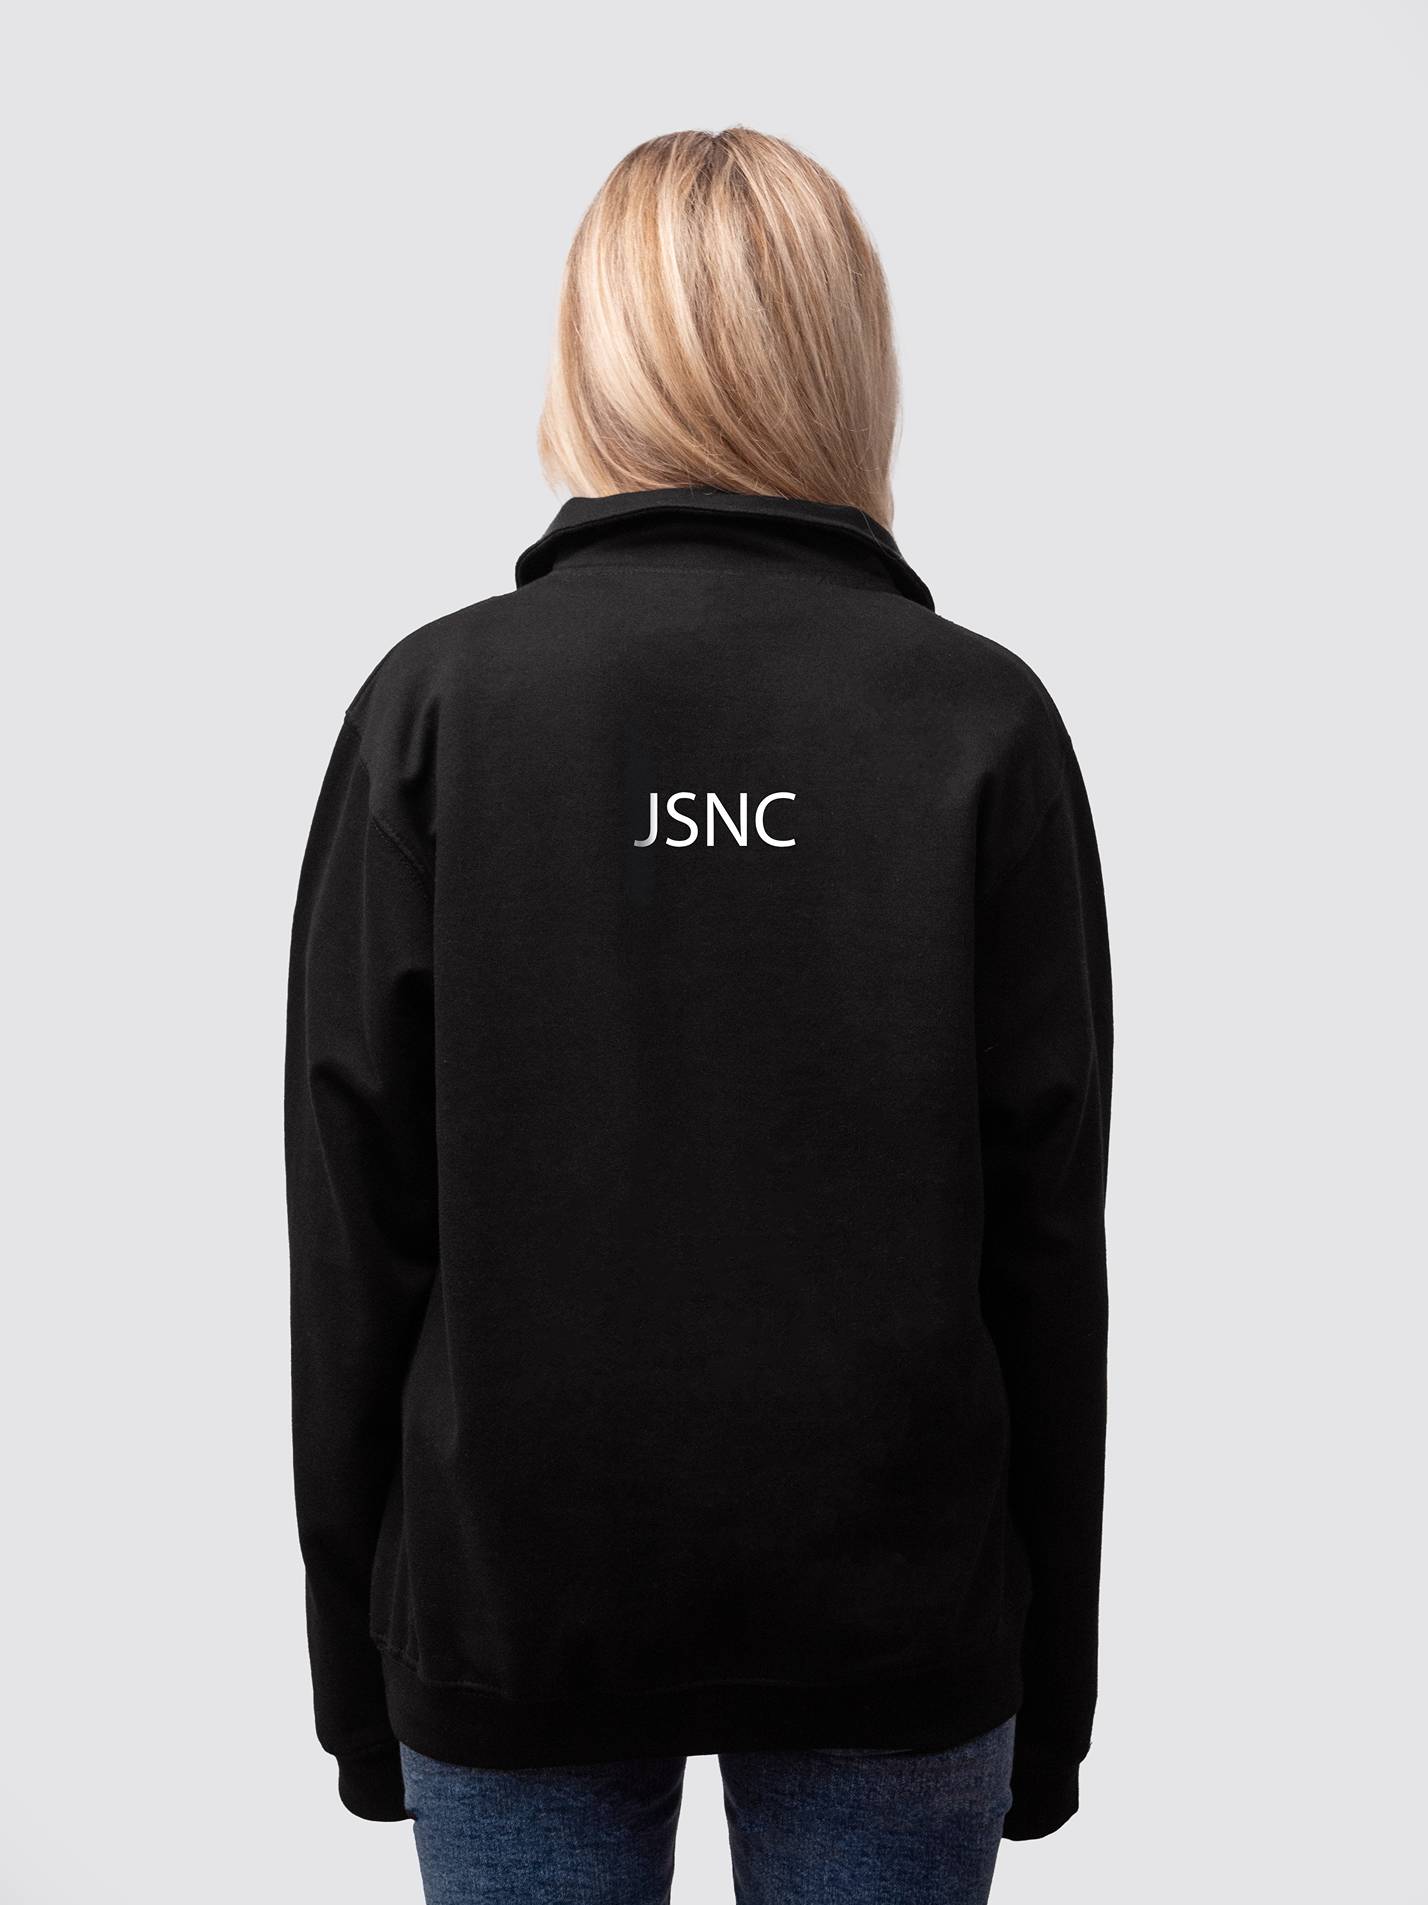 John Snow Netball Club 1/4 Zip Sweatshirt